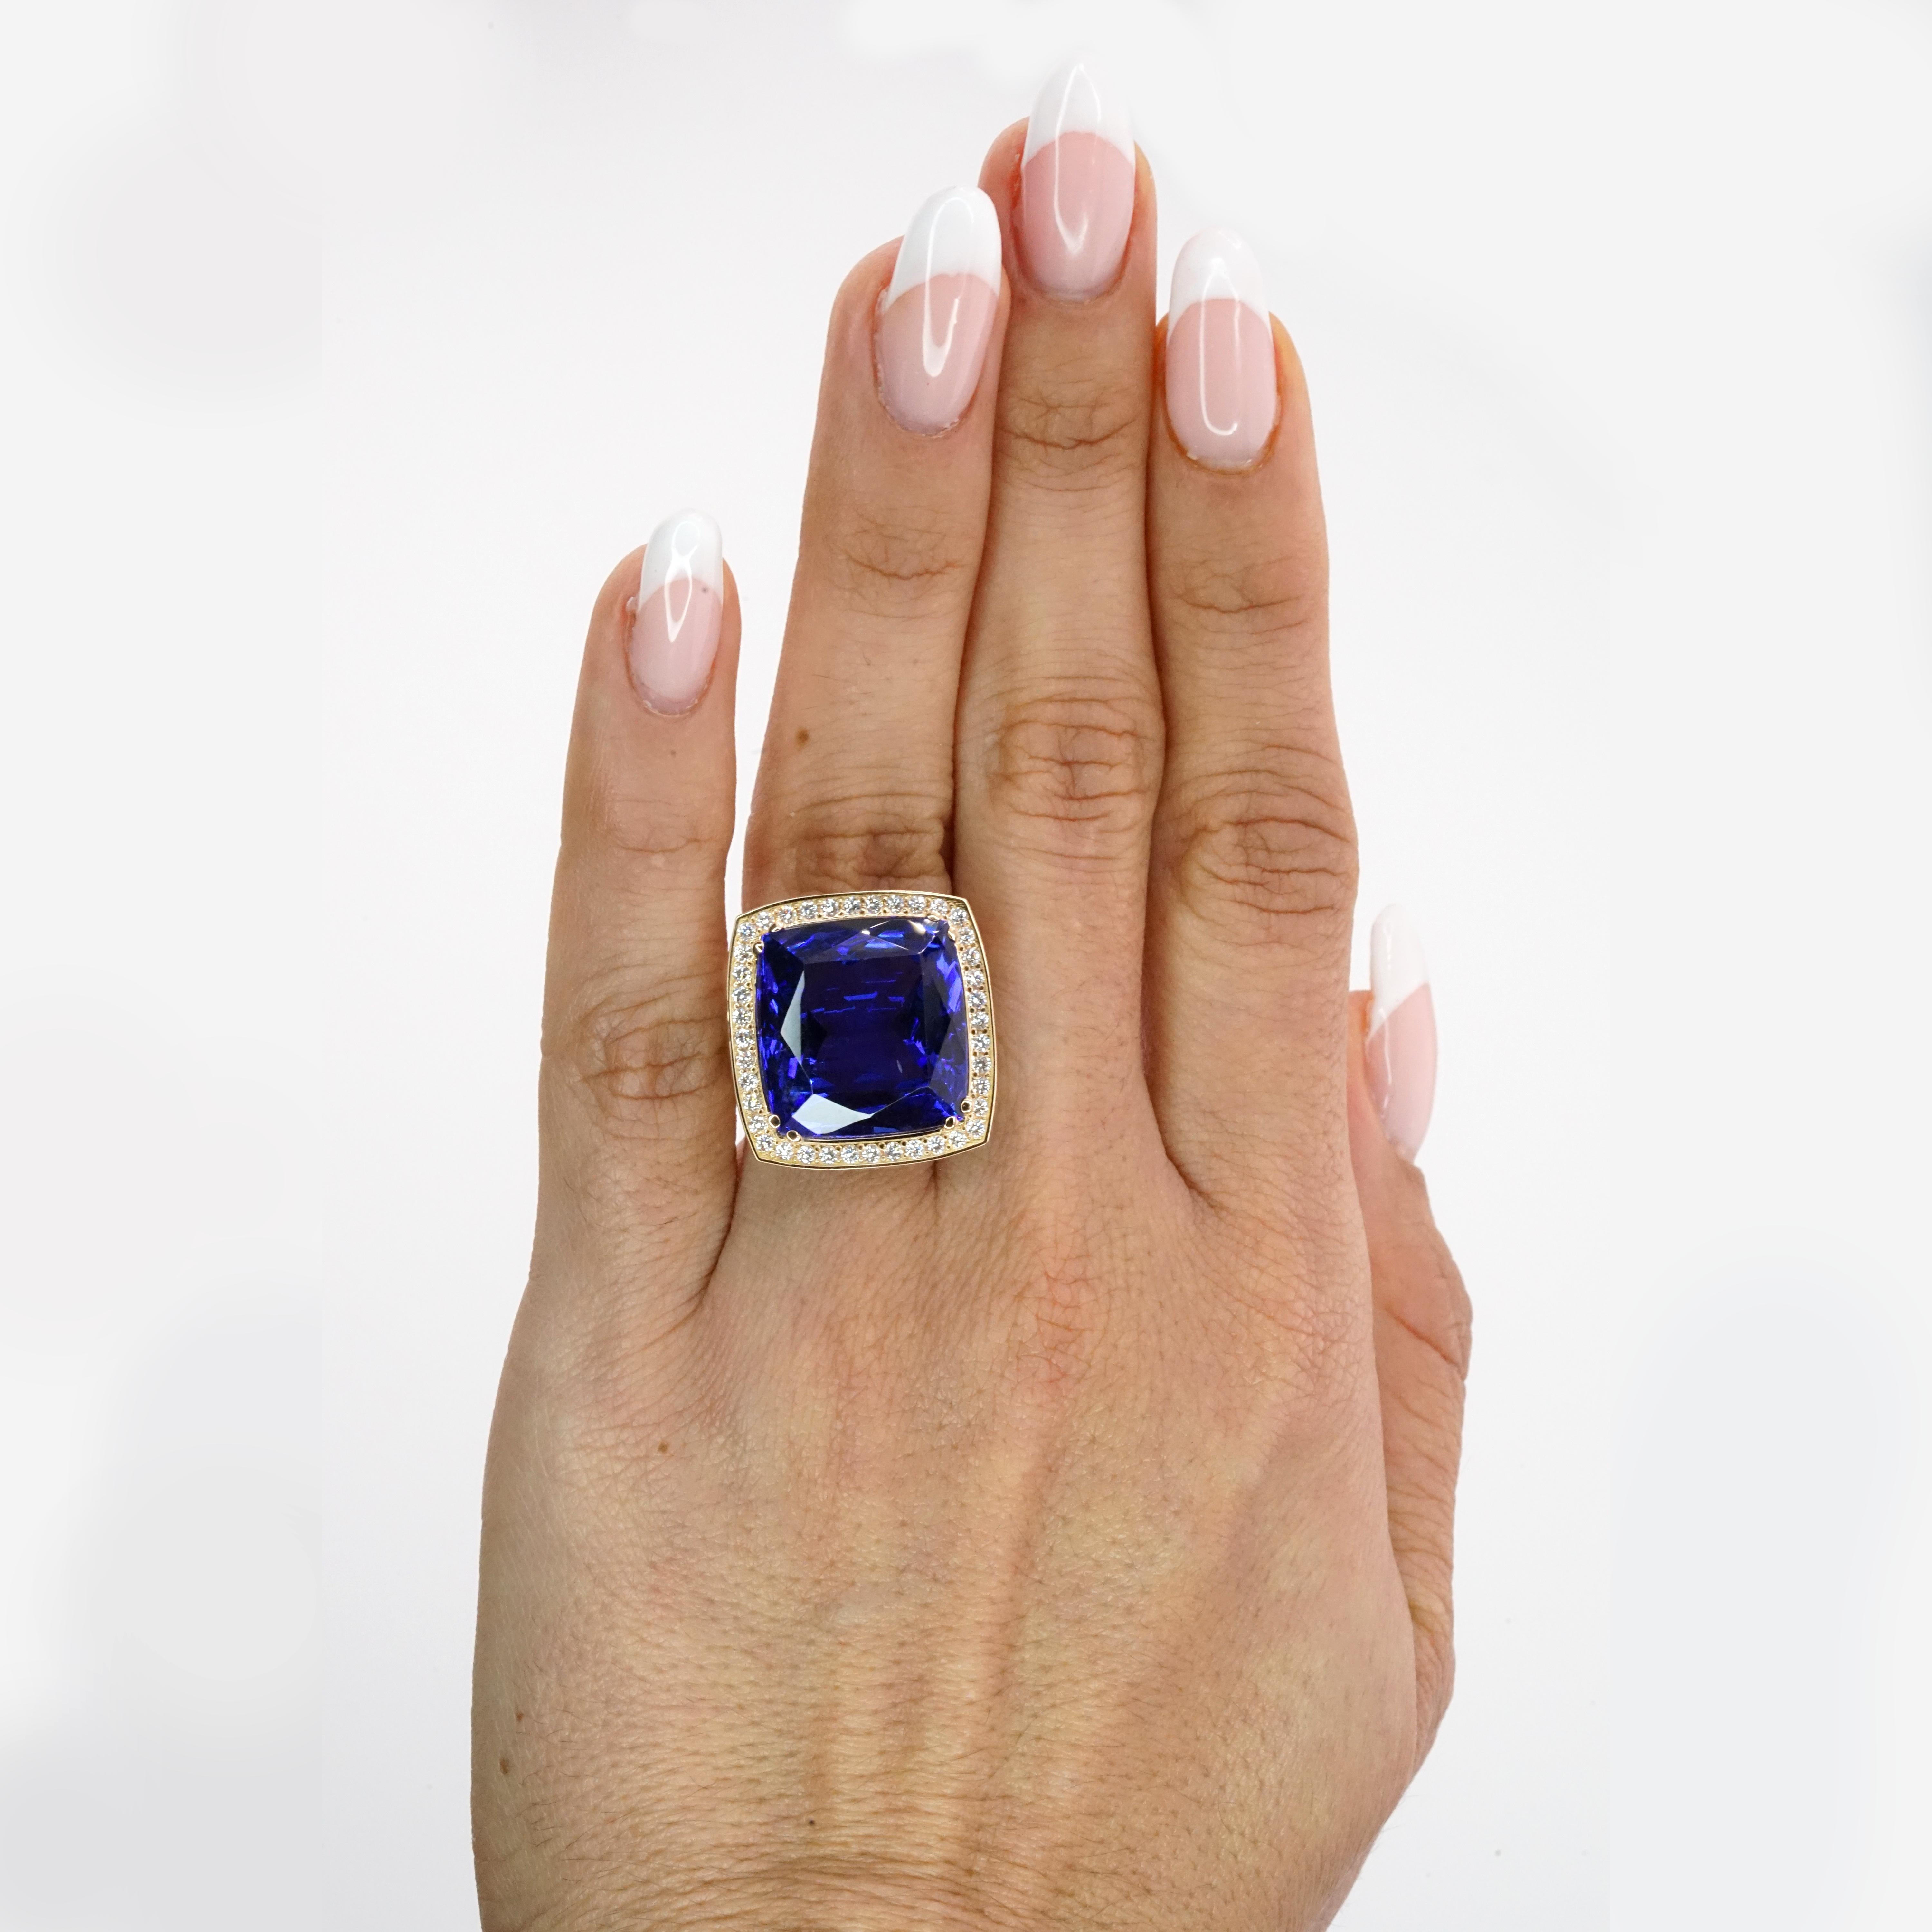 Modern EGL South Africa Certified 21 Carat Violet Blue Tanzanite 18K Rose Gold Ring For Sale